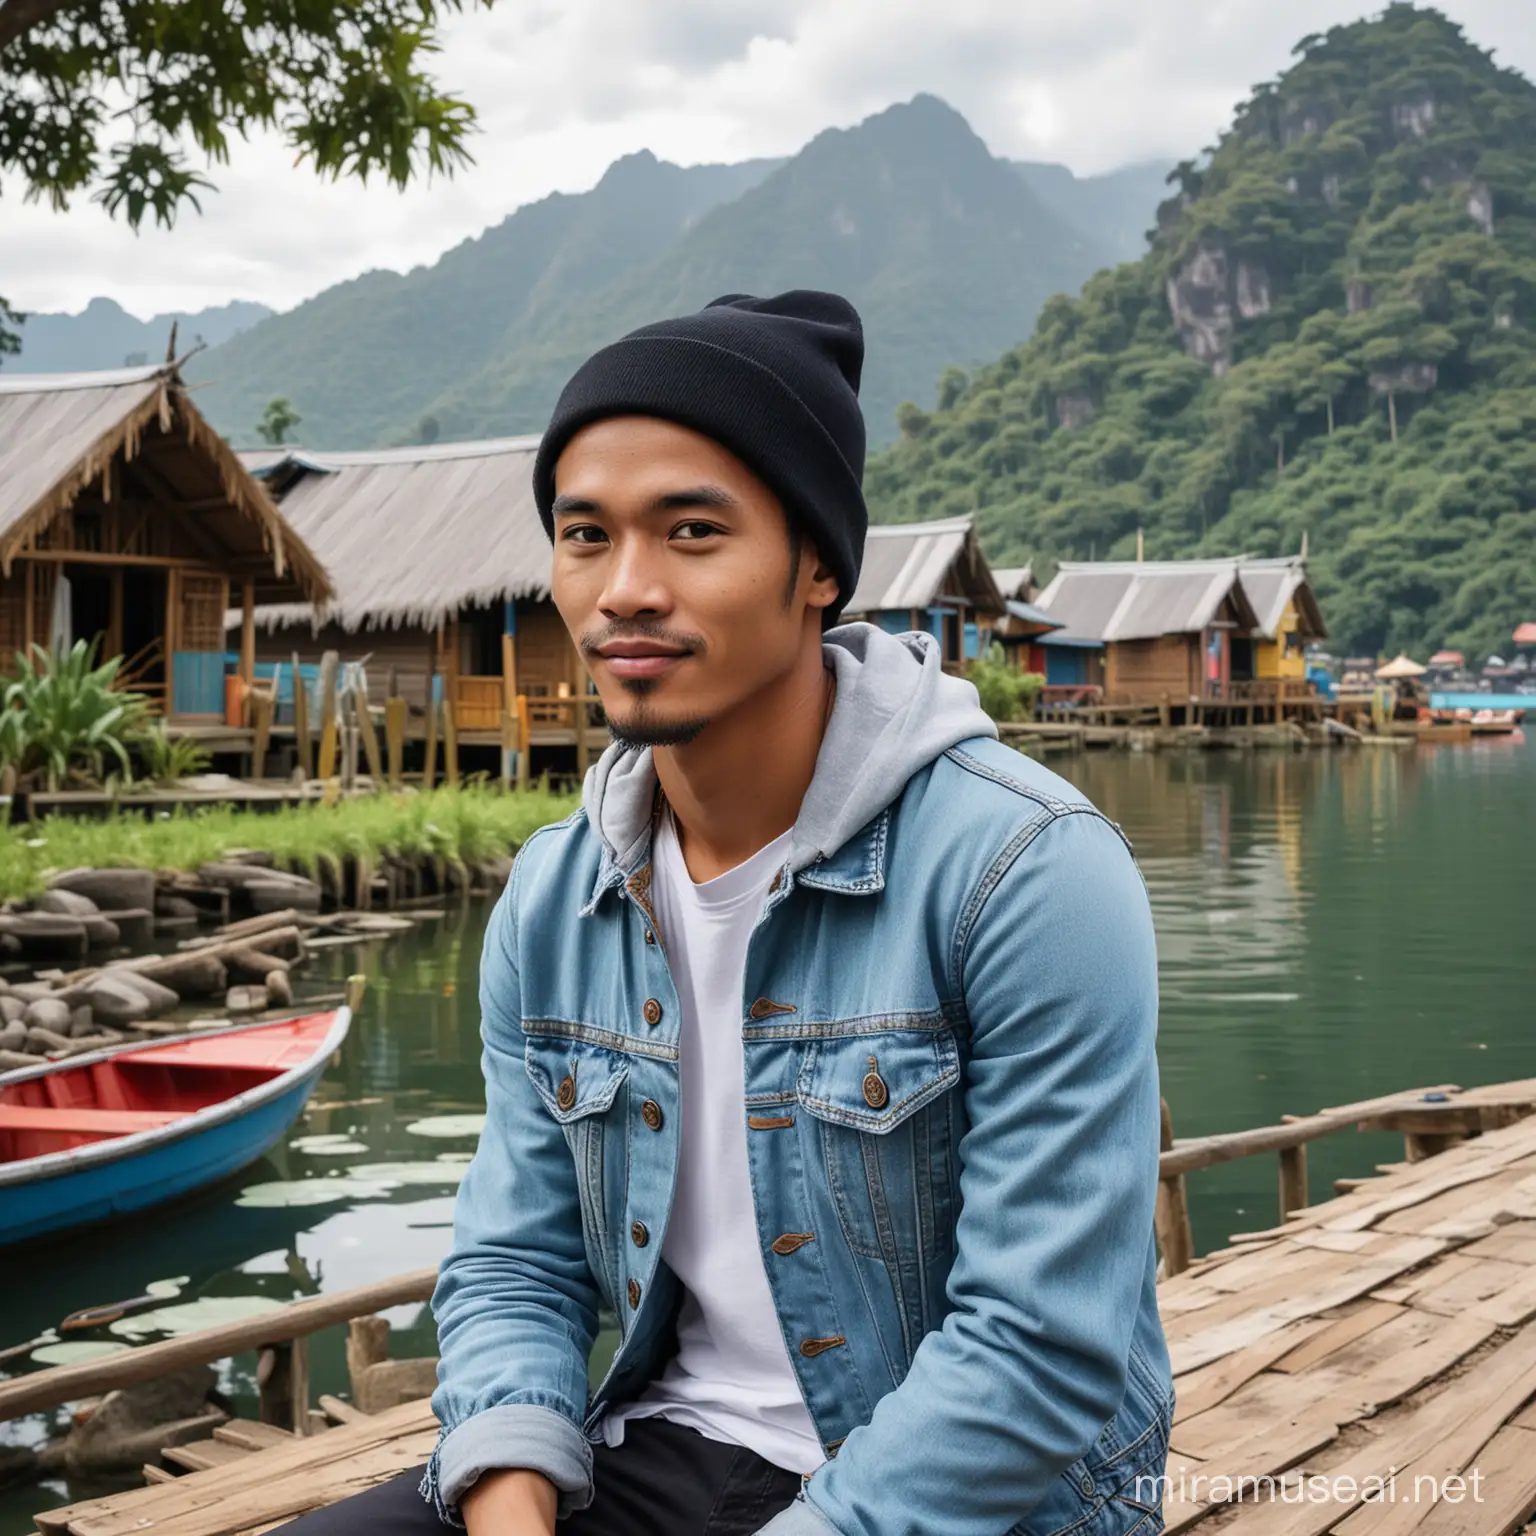 Gambar seorang lelaki indonesia tampan usia 30 tahun memakai beanie hitam dan jaket jeans biru muda sedang duduk di tepi danau di siang hari,latar belakang,beberapa pondok beratap daun,dan beberapa sampan berwarna,gambar asli dan nyata ultra hd